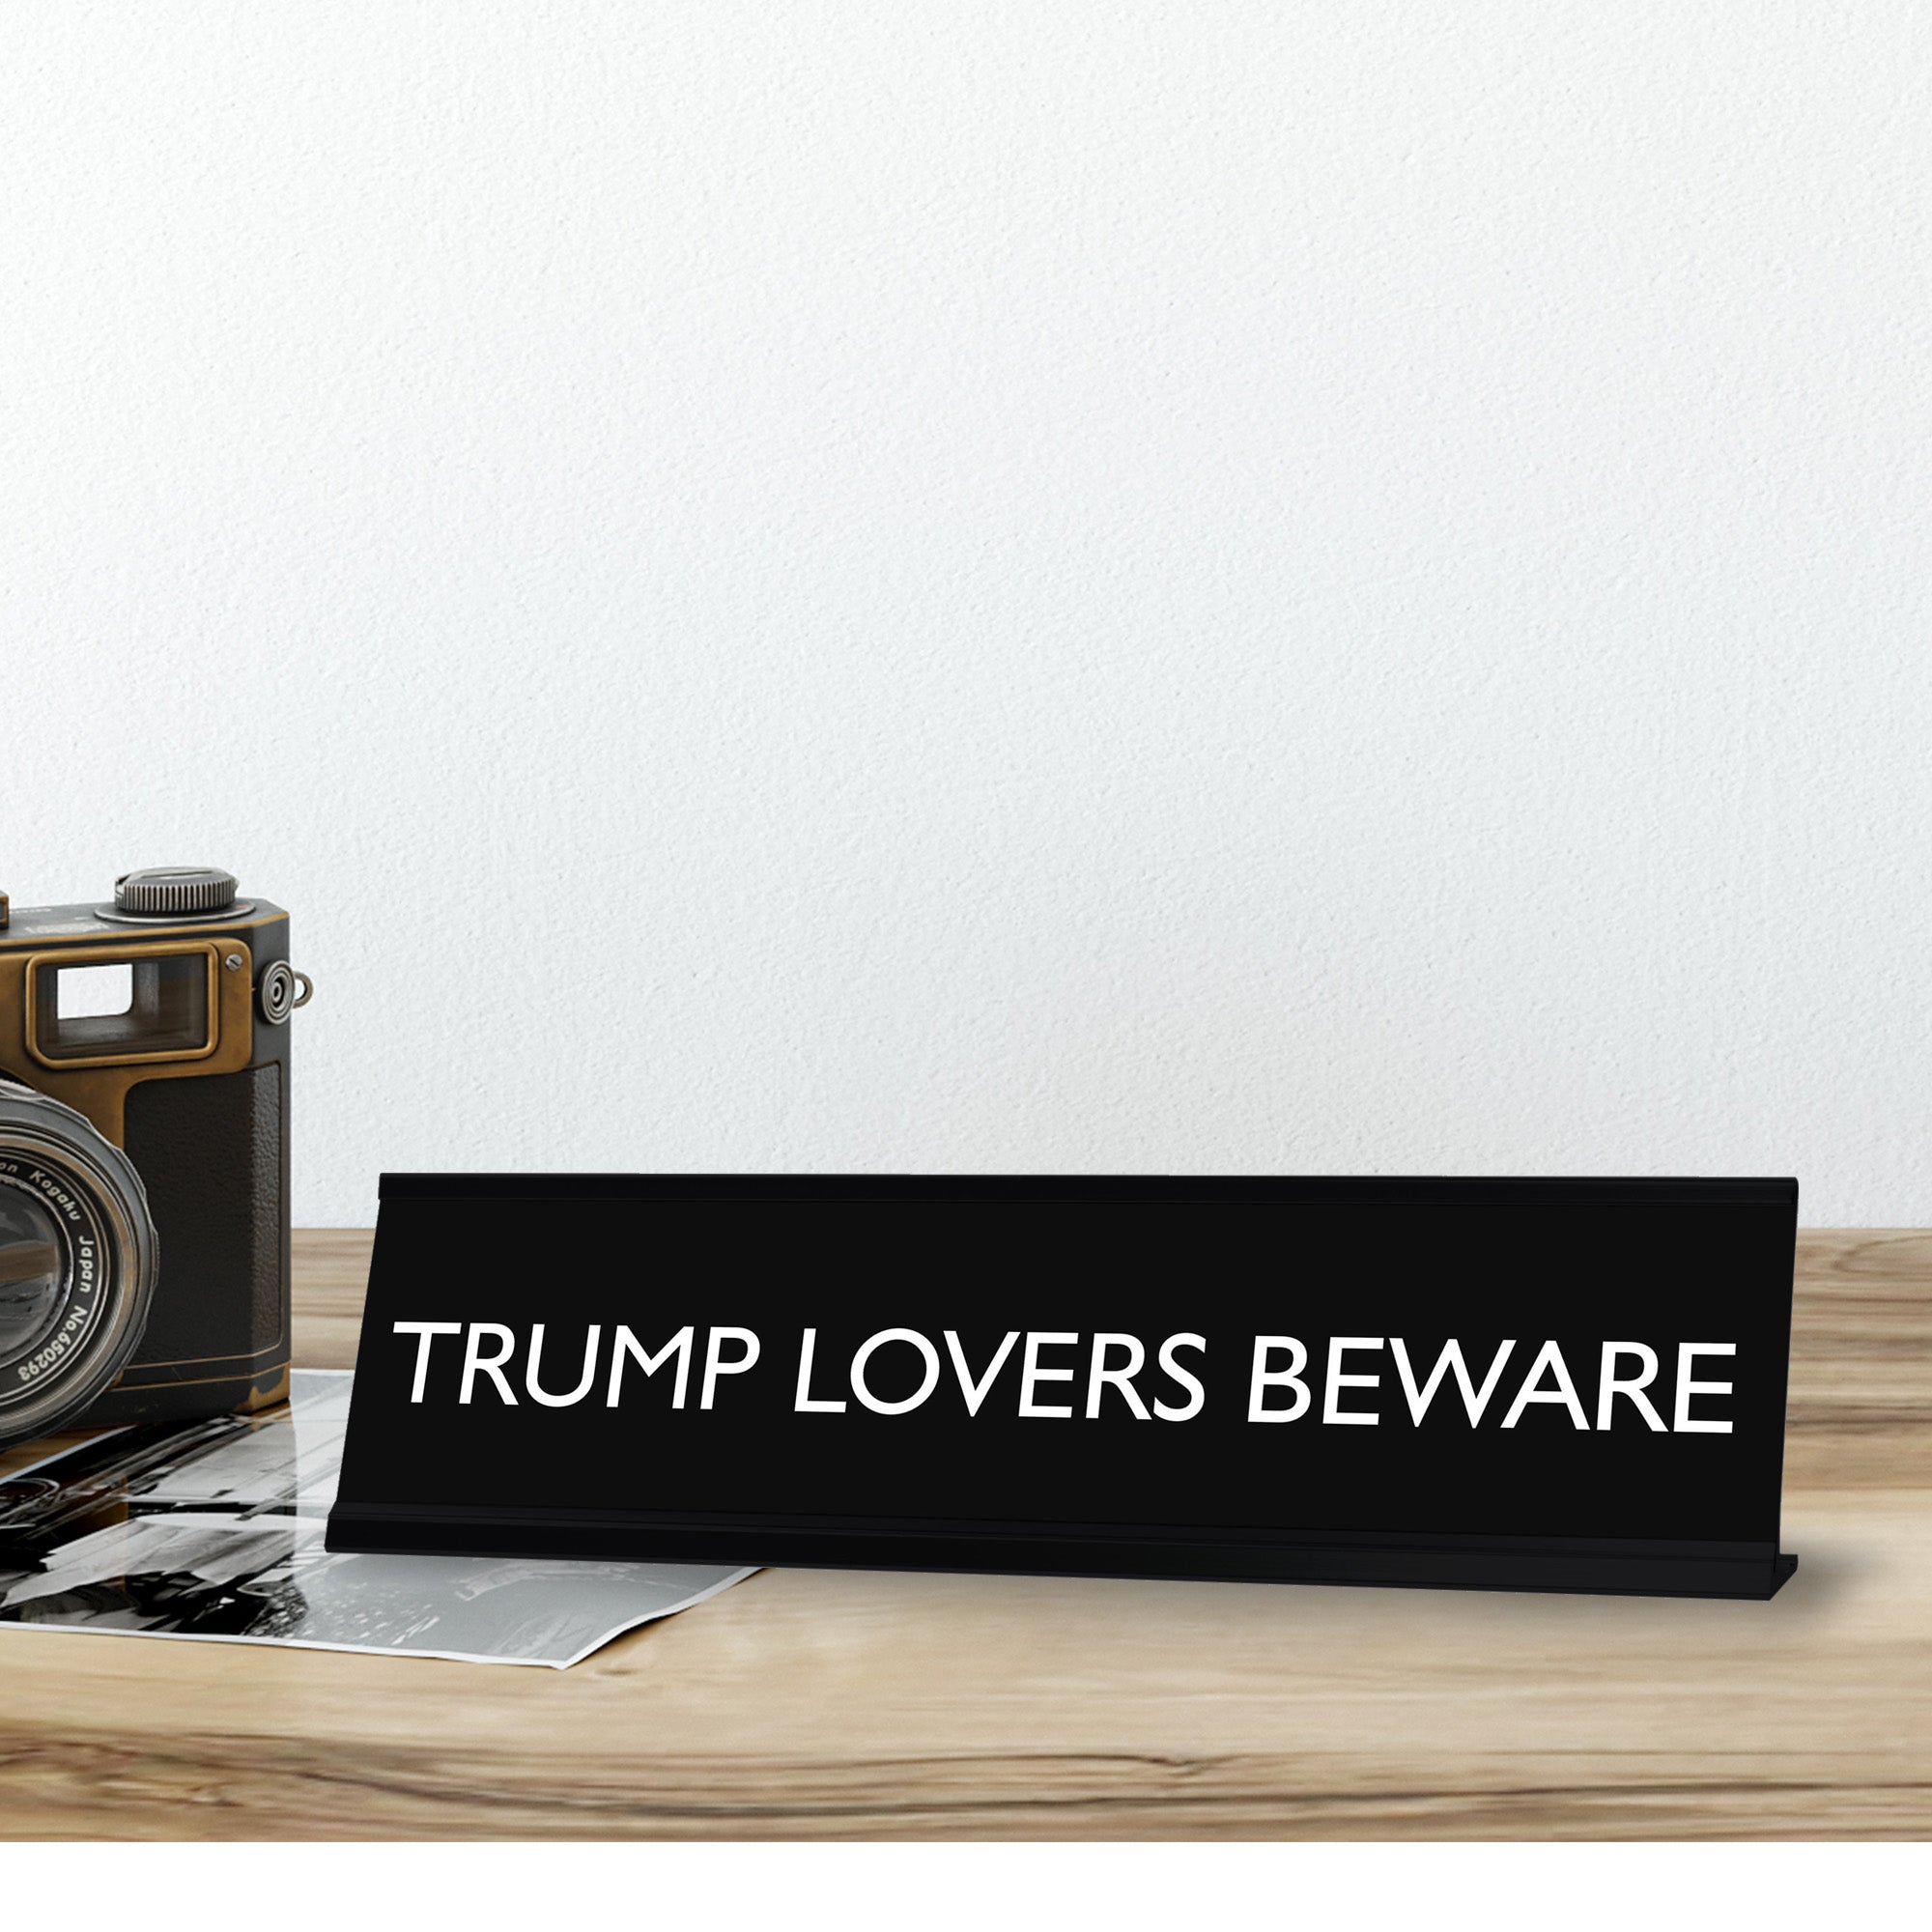 TRUMP LOVERS BEWARE Novelty Desk Sign